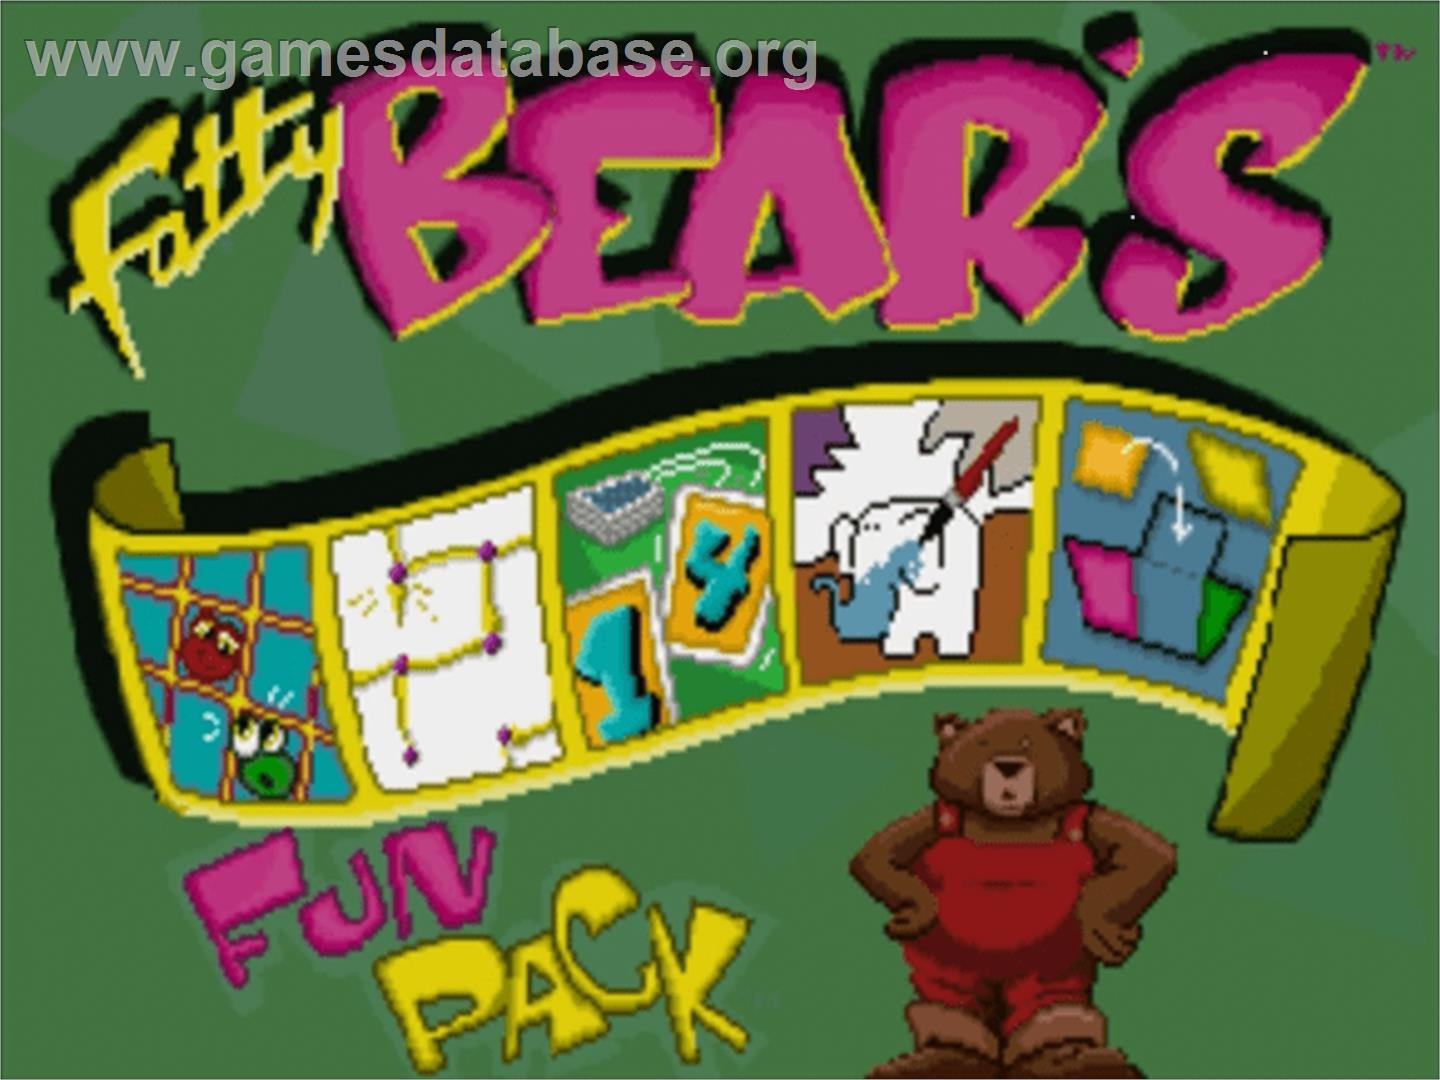 Fatty Bear's Fun Pack - Panasonic 3DO - Artwork - Title Screen